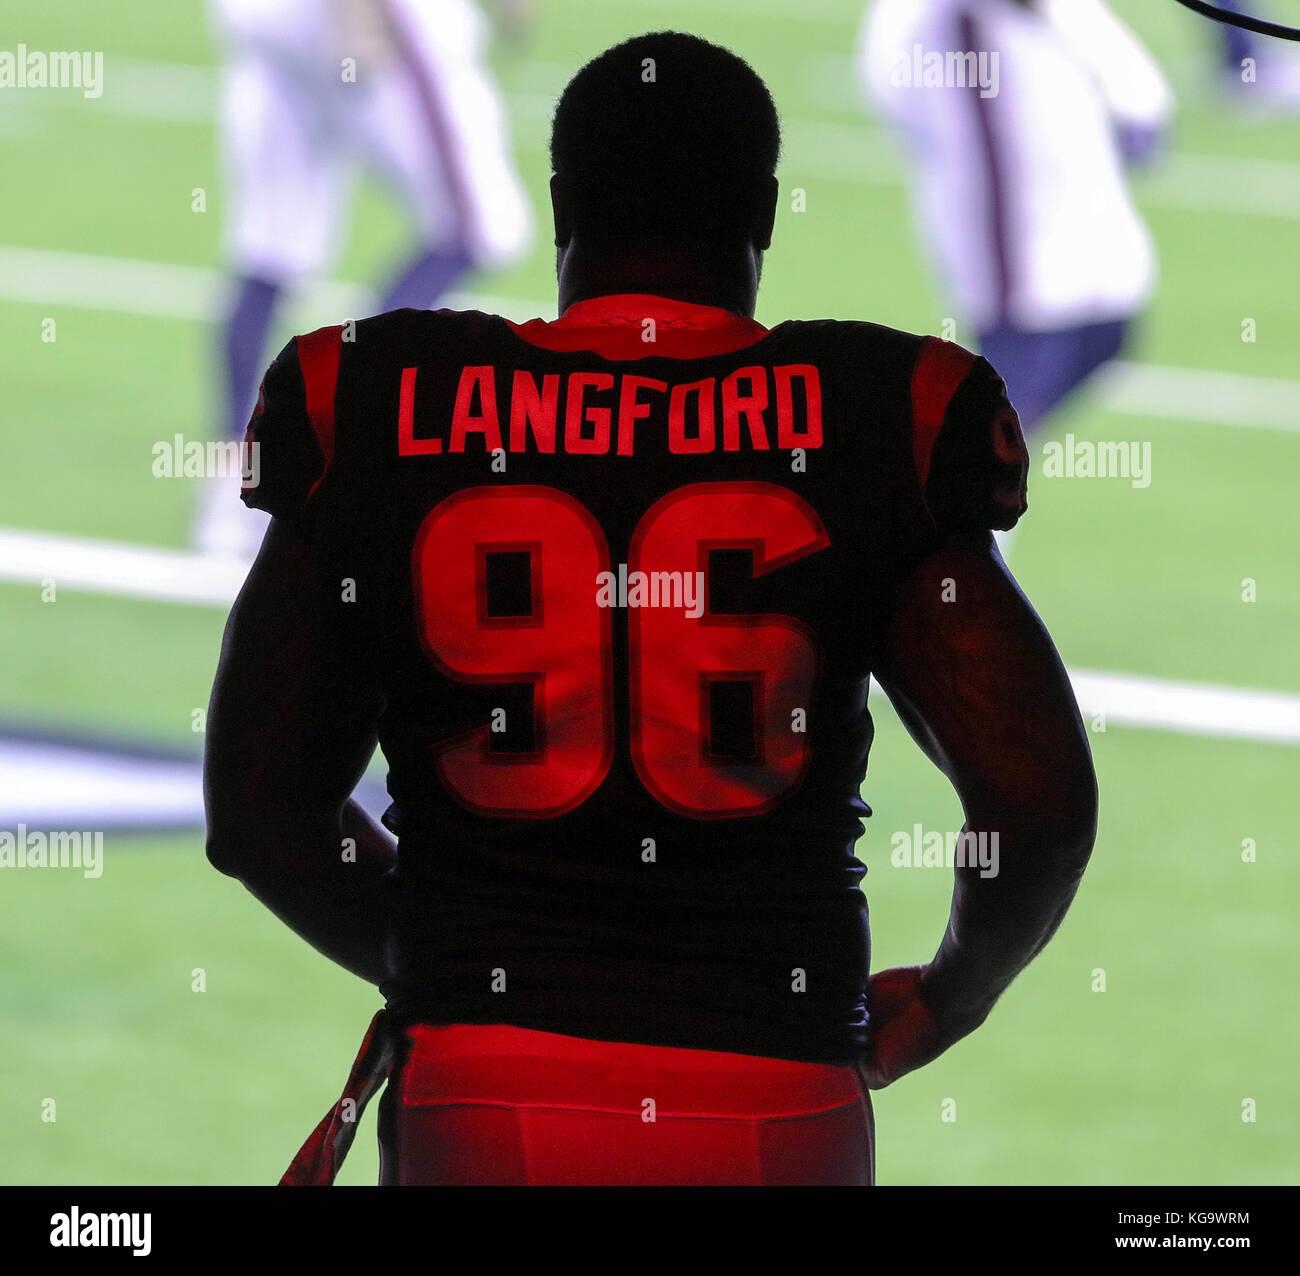 Houston, TX, EE.UU. 5 nov, 2017. Houston Texans fin defensivo Kendall Langford (96) durante la NFL juego entre los Indianapolis Colts y los Houston Texans en NRG Stadium en Houston, TX. John Glaser/CSM/Alamy Live News Foto de stock